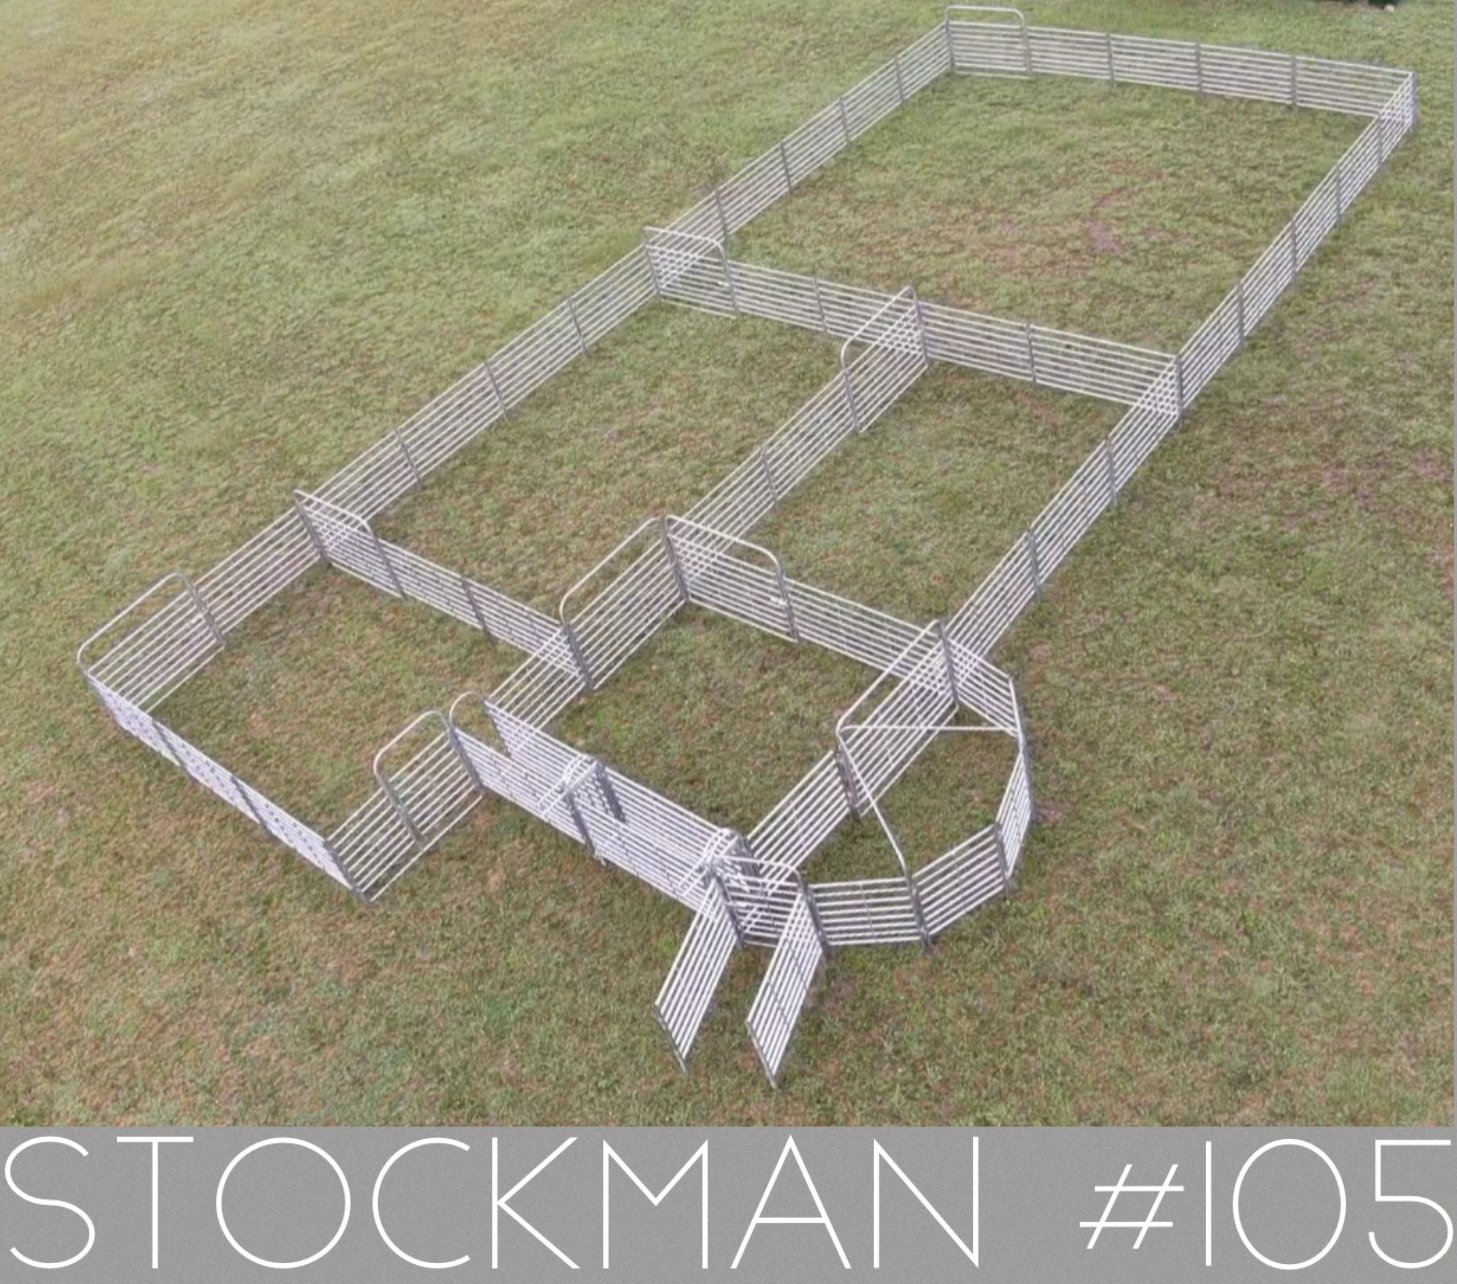 Stockman #105